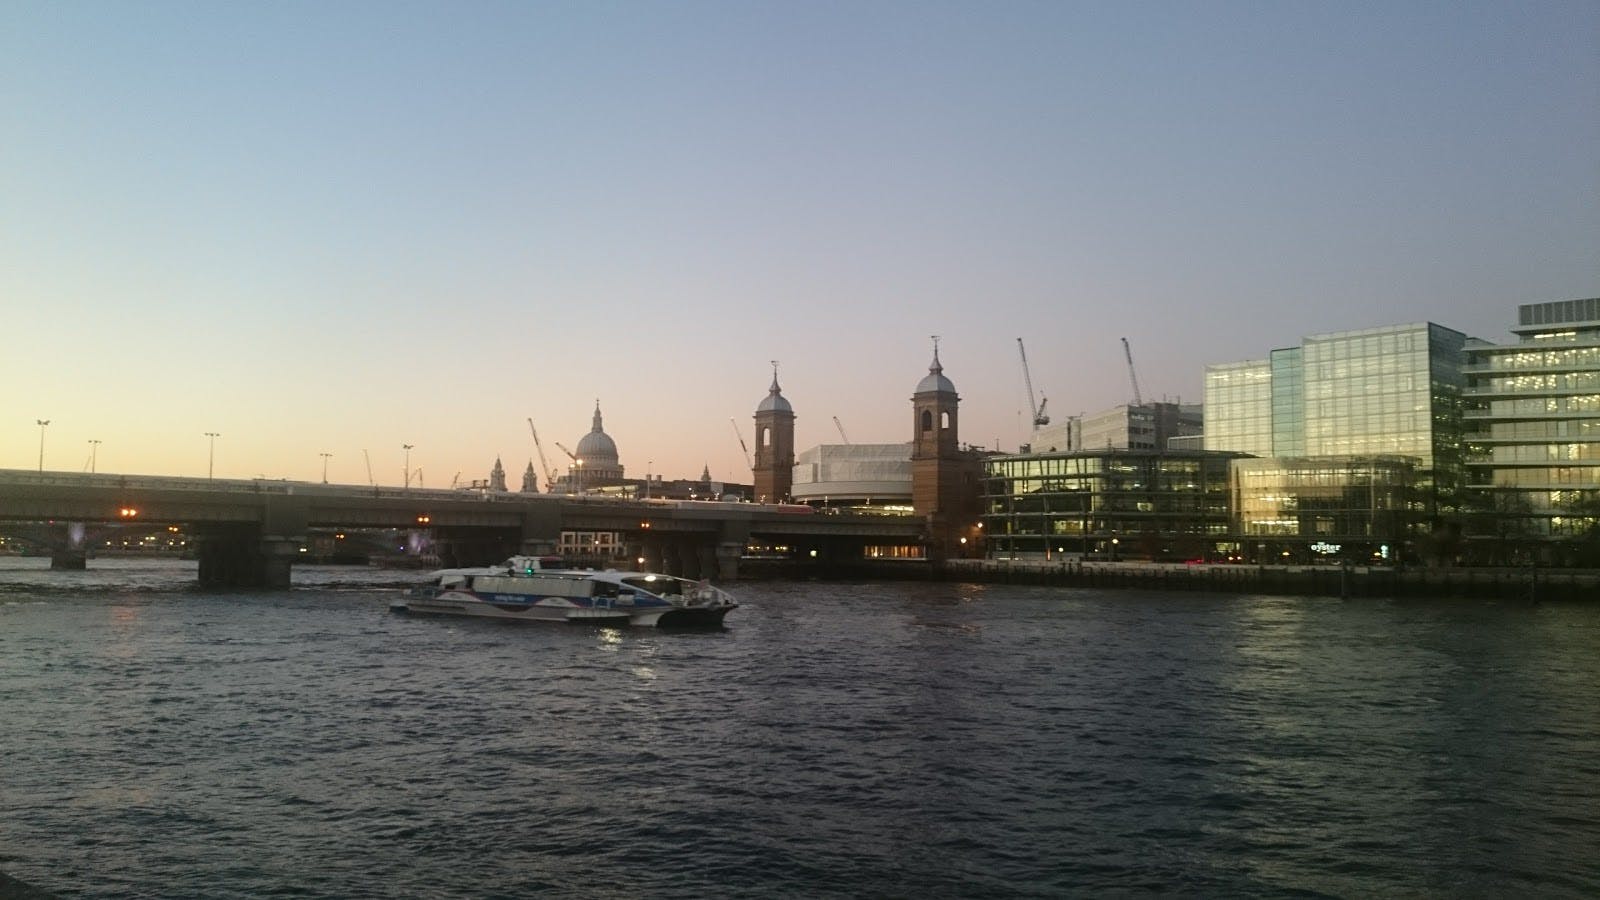 Image - London Bridge